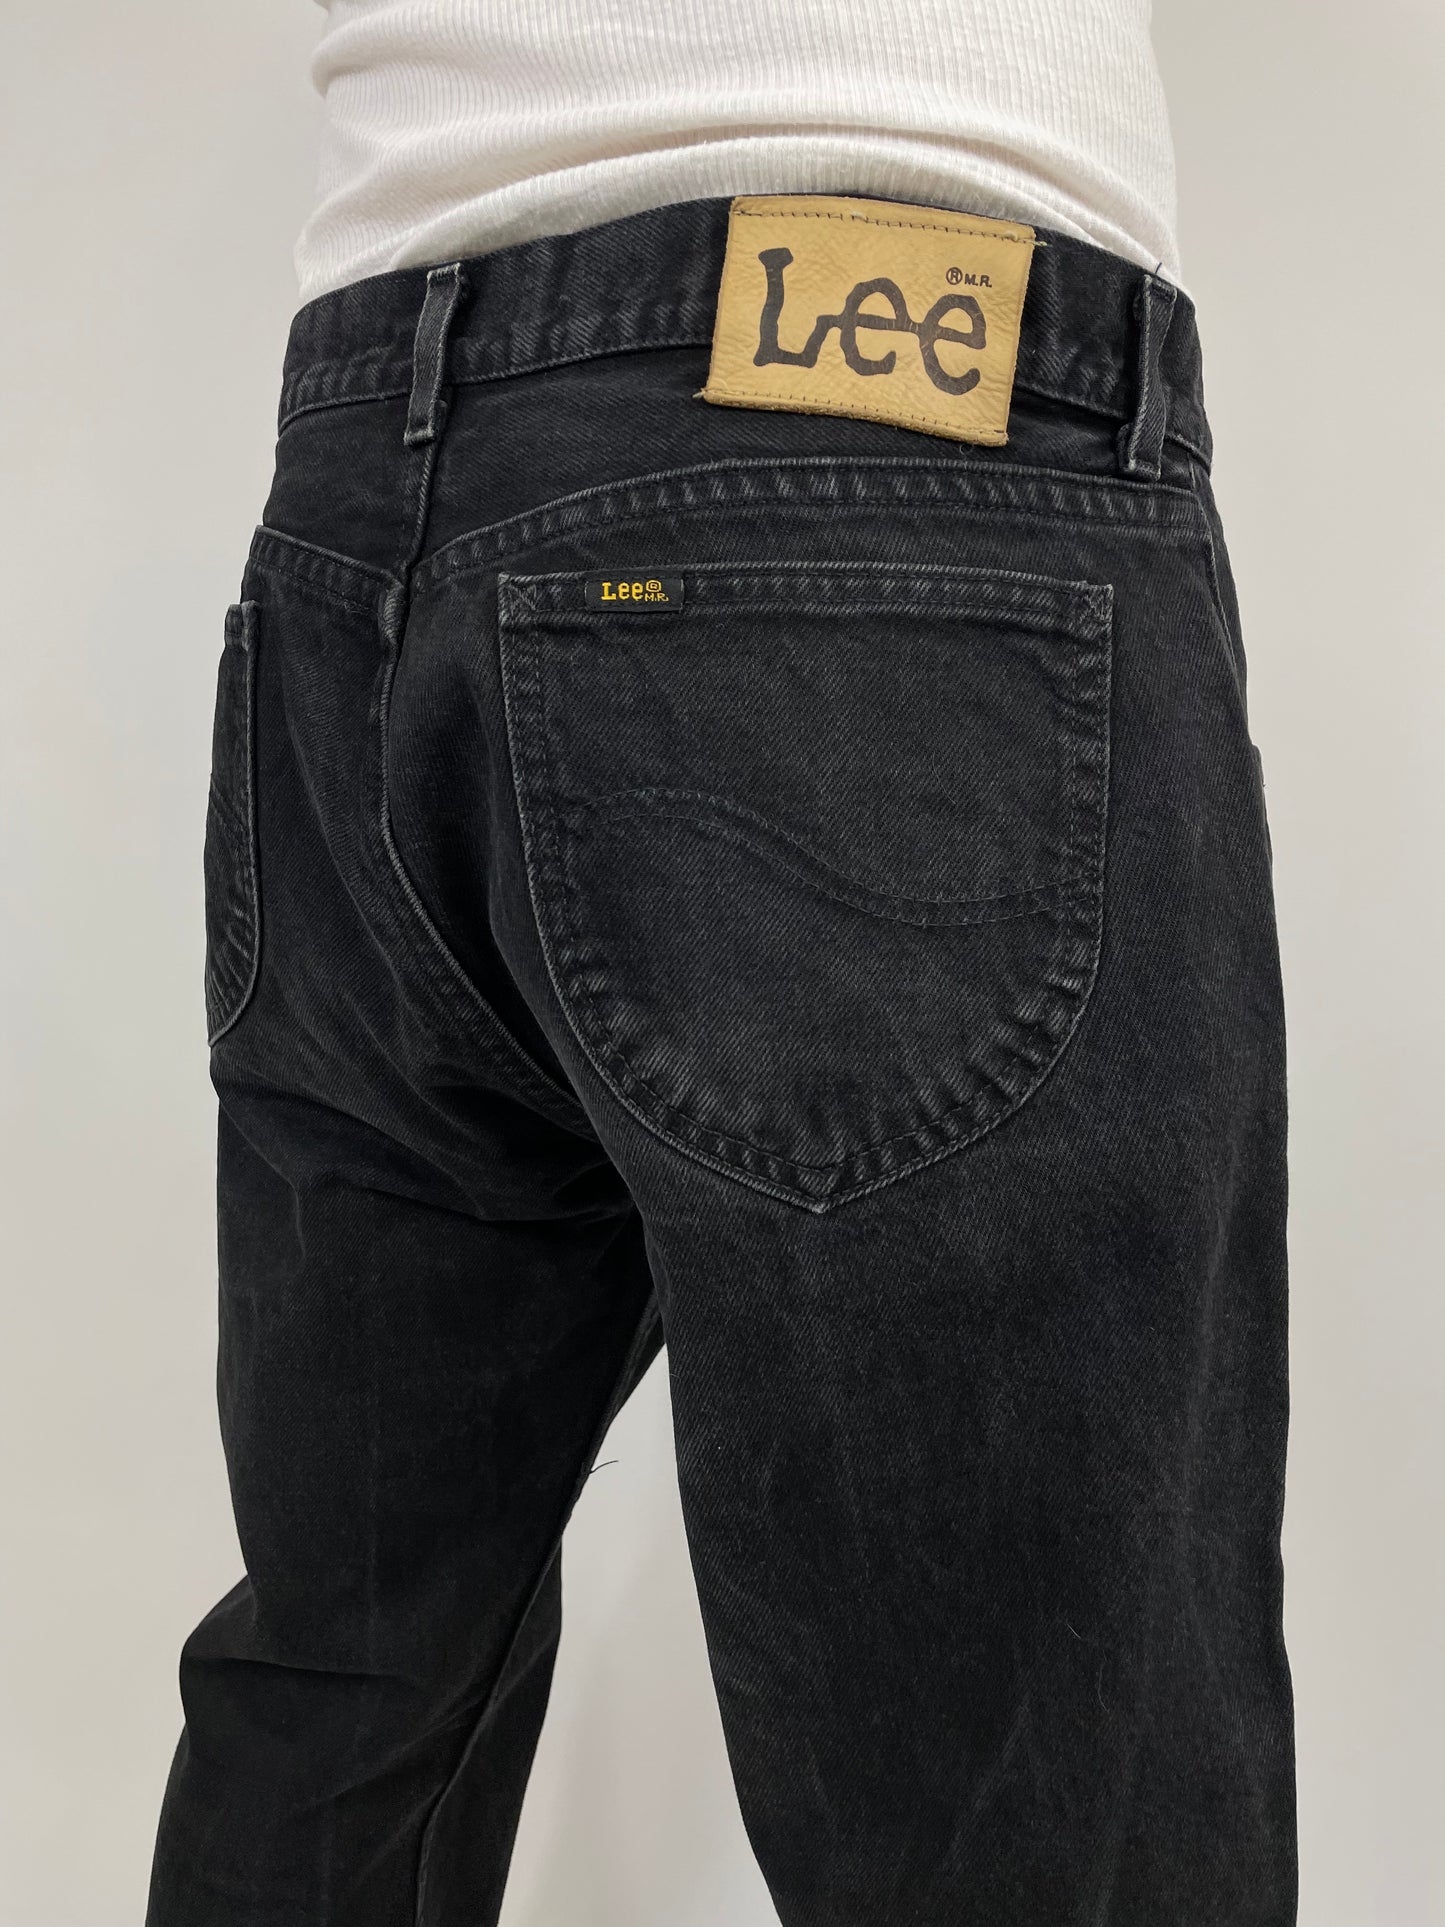 Jeans Lee